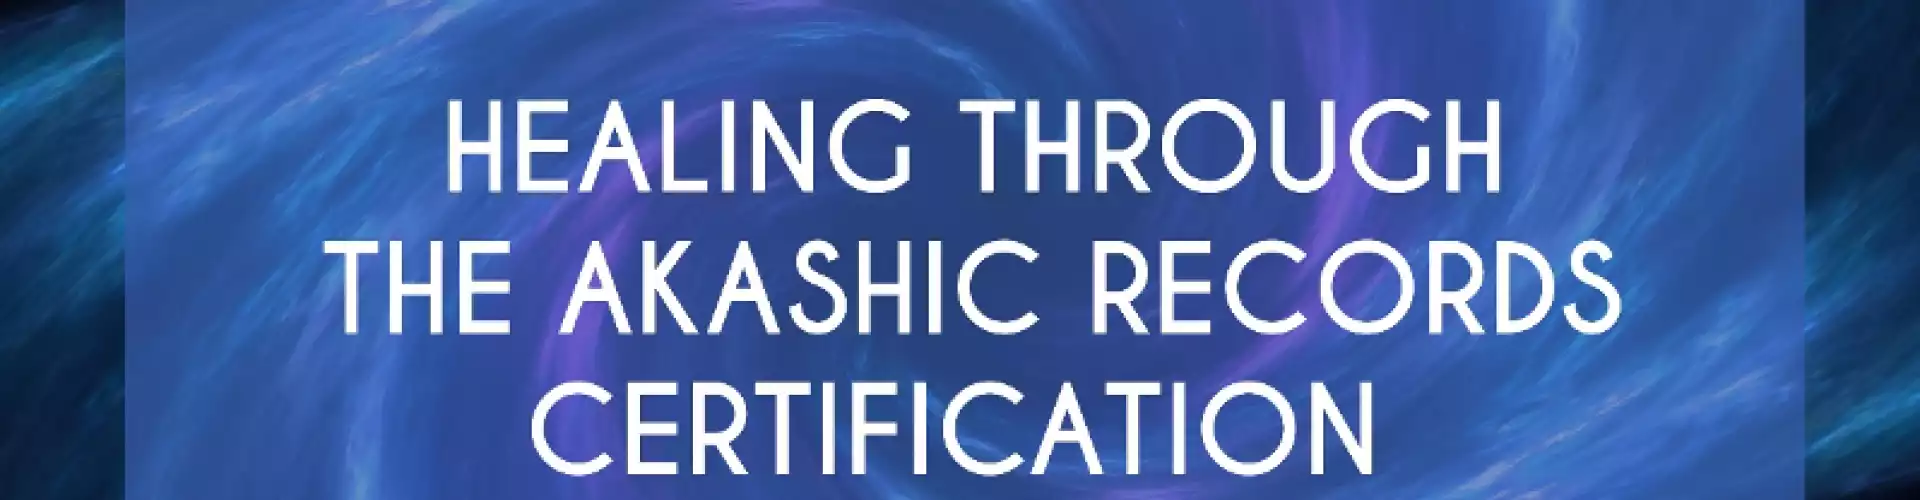 Healing Through the Akashic Records Certification - December 5, 2020 - Amy Mak